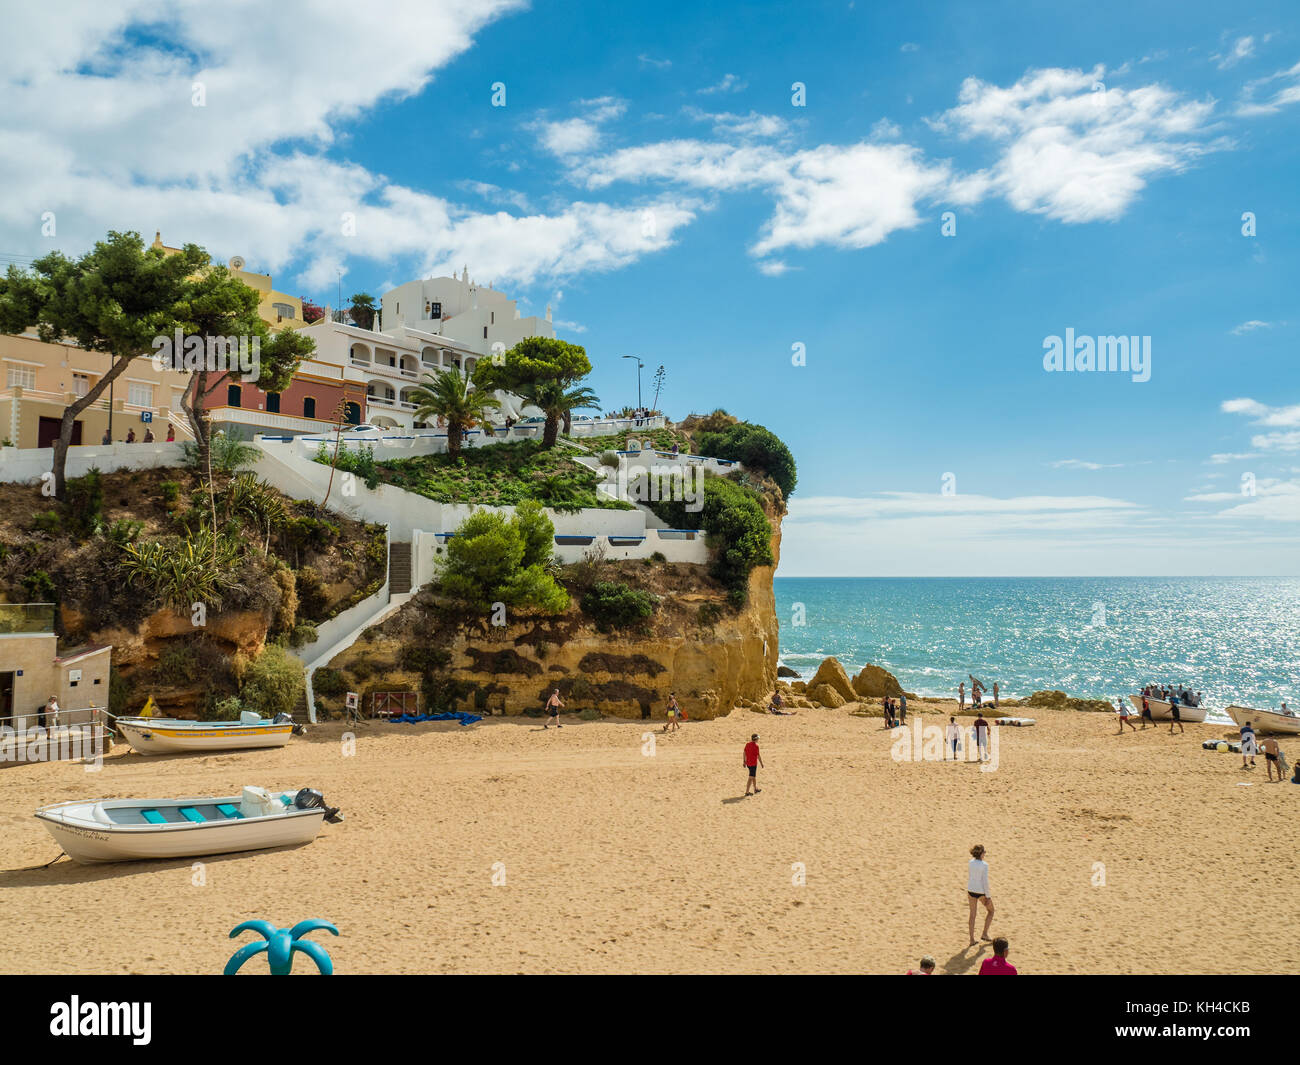 Carvoeiro, Portugal - Oktober 20, 2017: Carvoeiro Strand an der südlichen Atlantikküste Portugals. Stockfoto